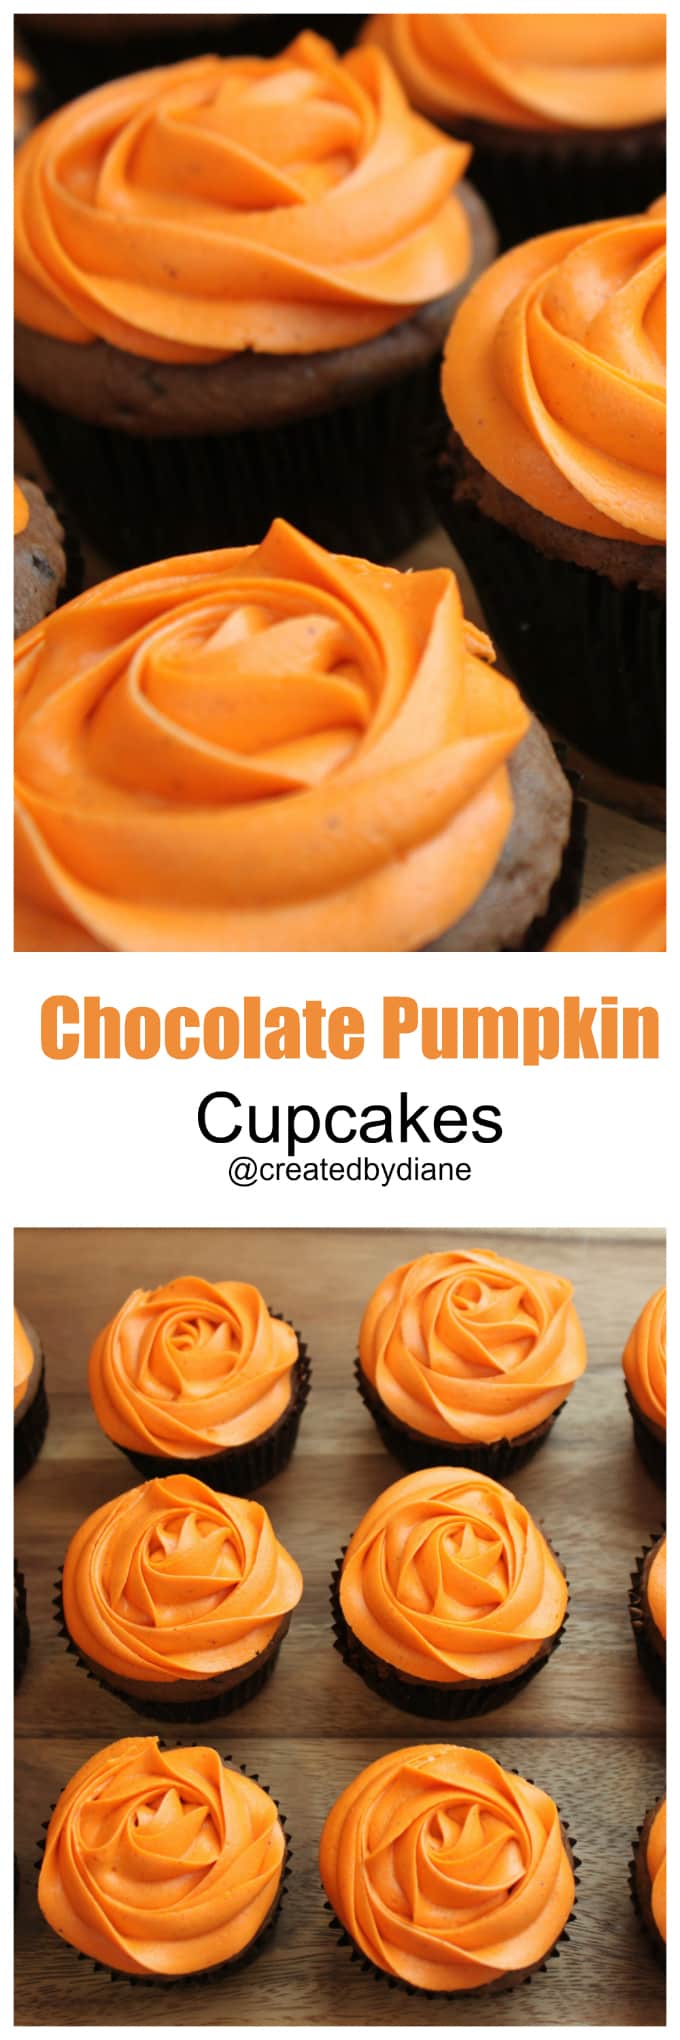 chocolate pumpkin cupcakes from @createdbydiane